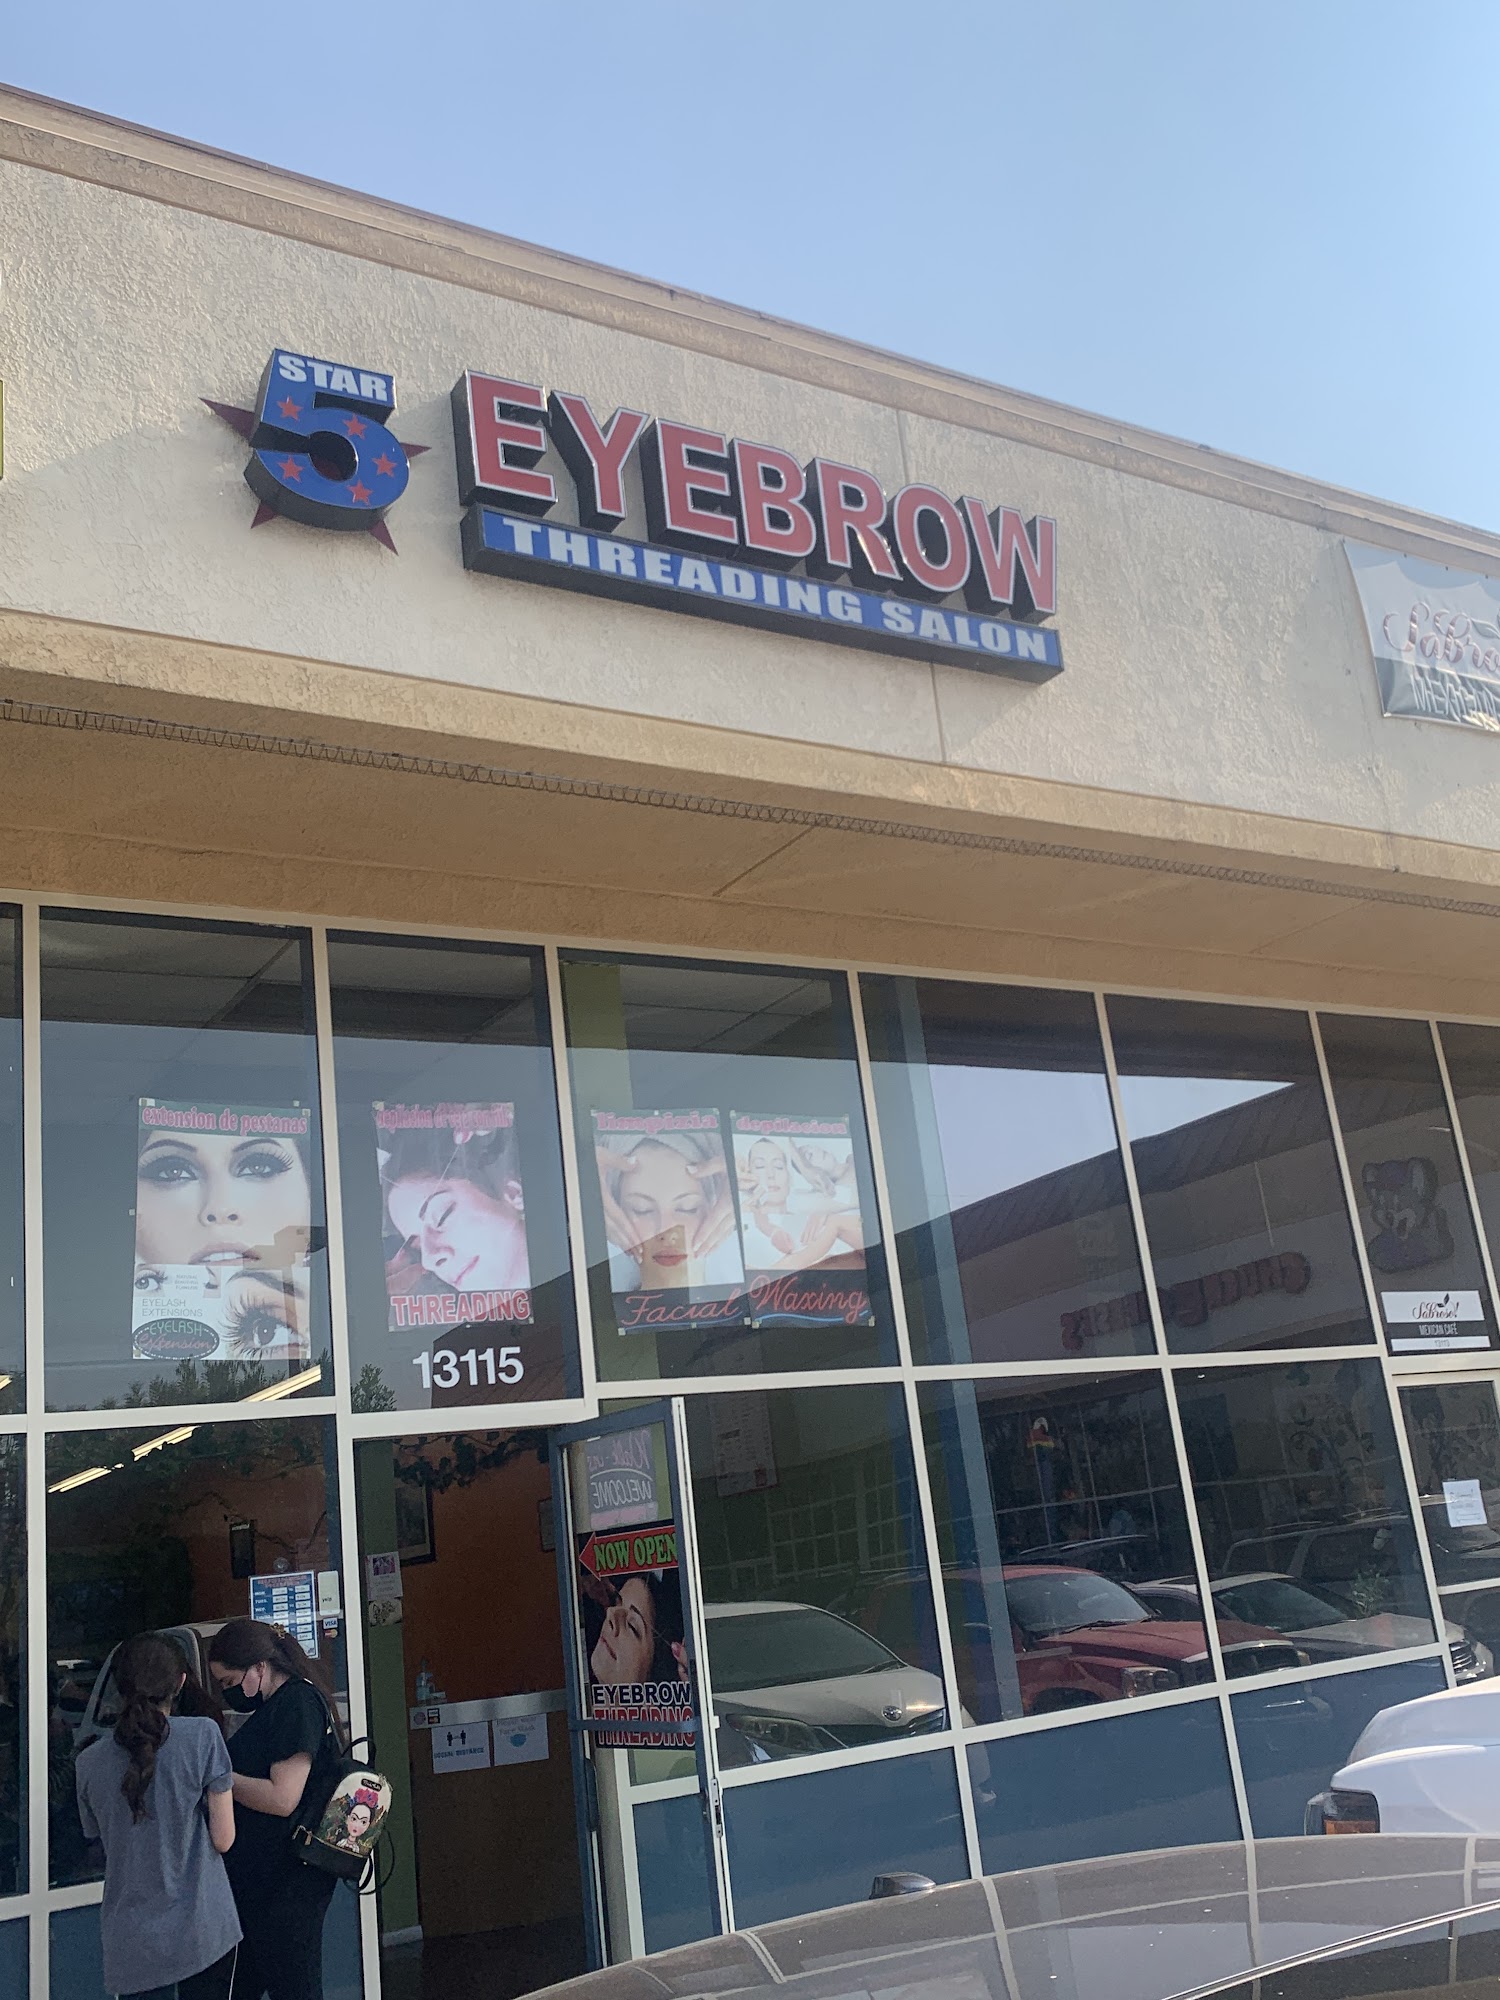 5 Star Eyebrow Threading Salon